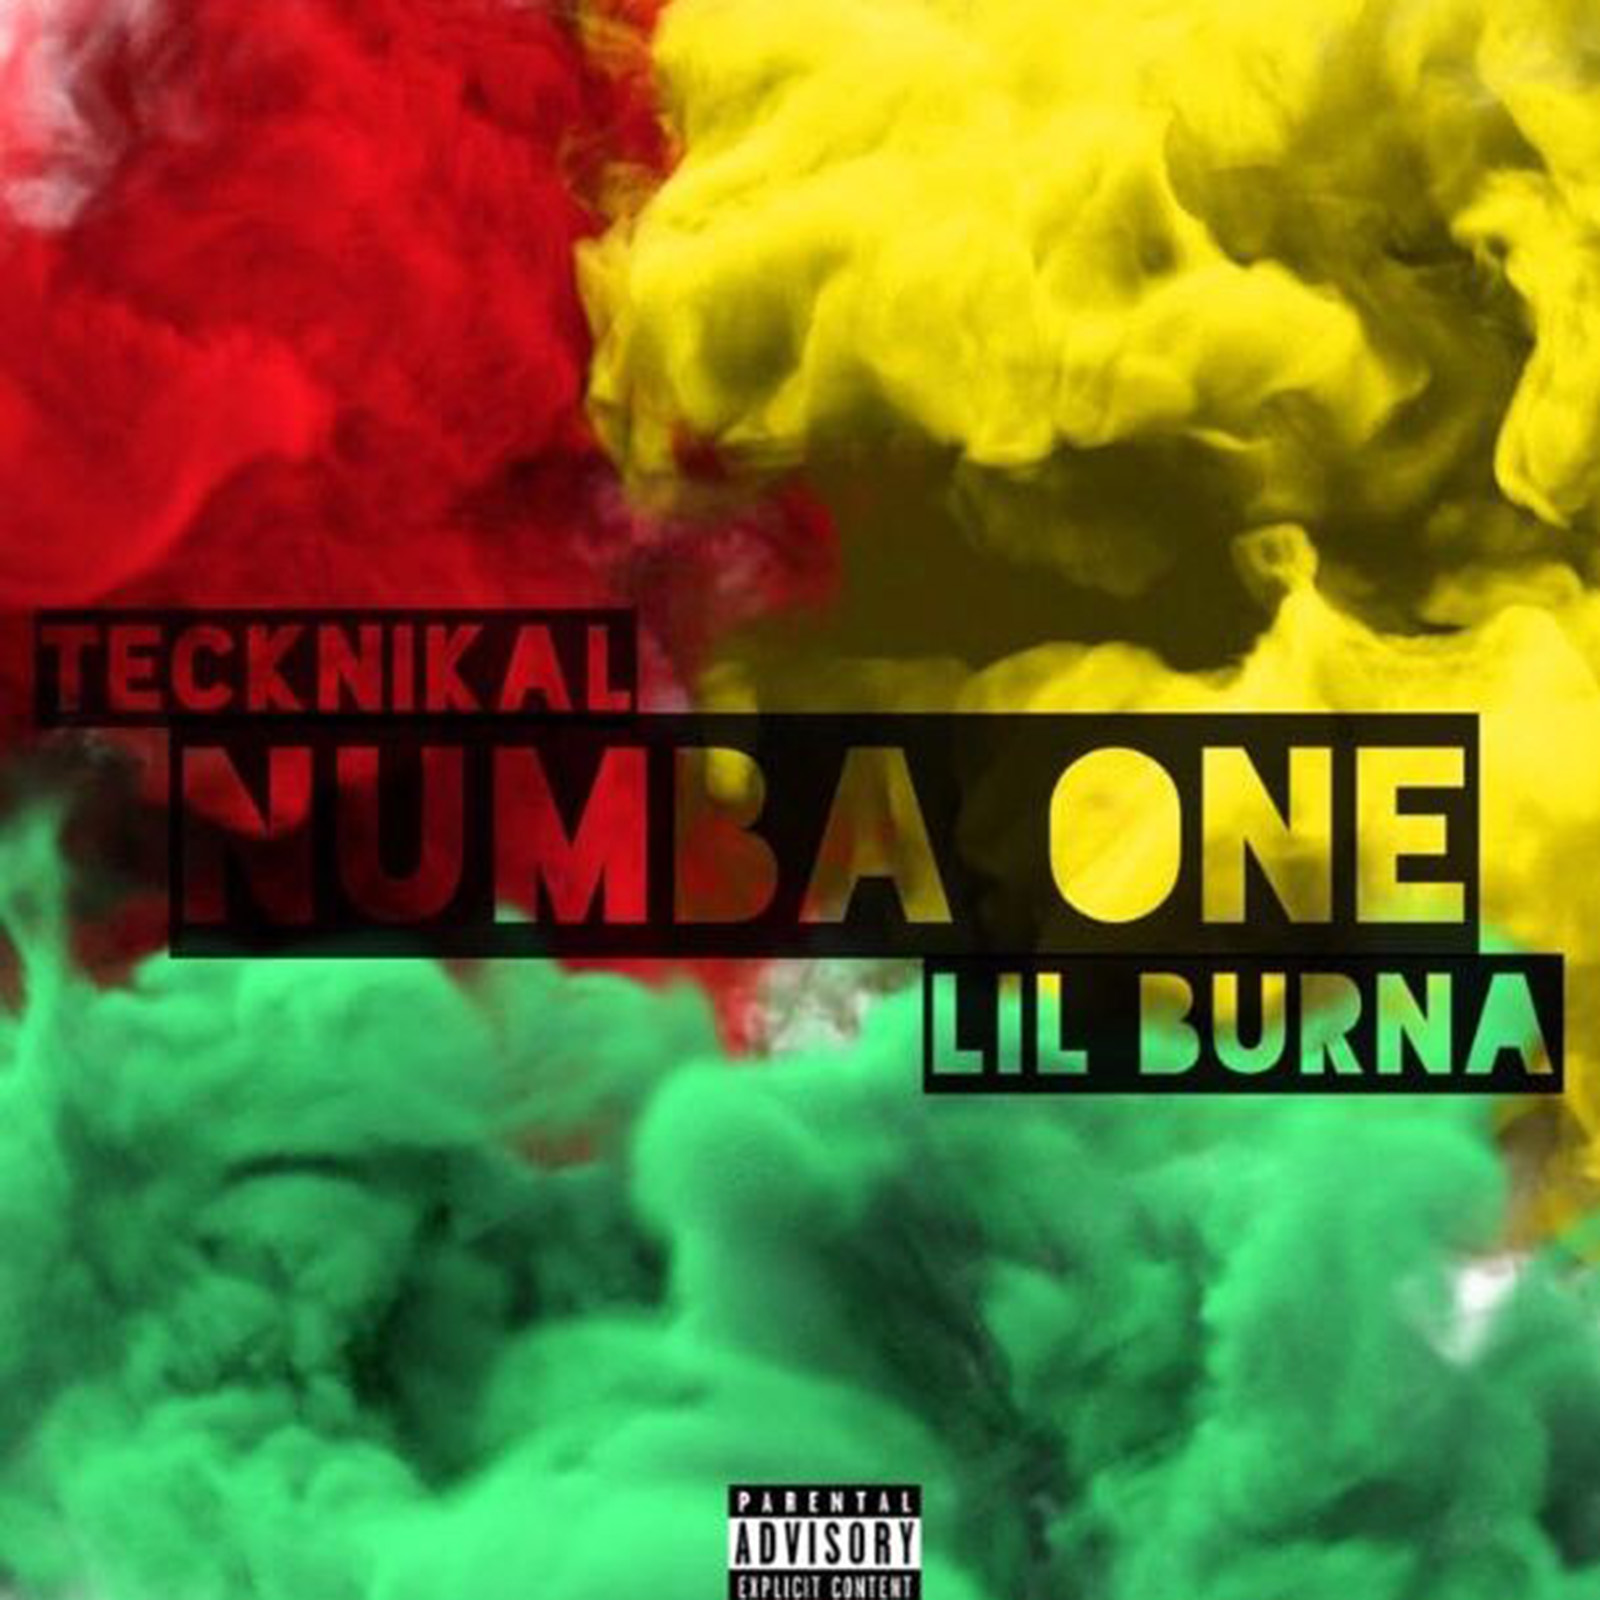 Numba 1 by Tecknikal feat. Lil Burna